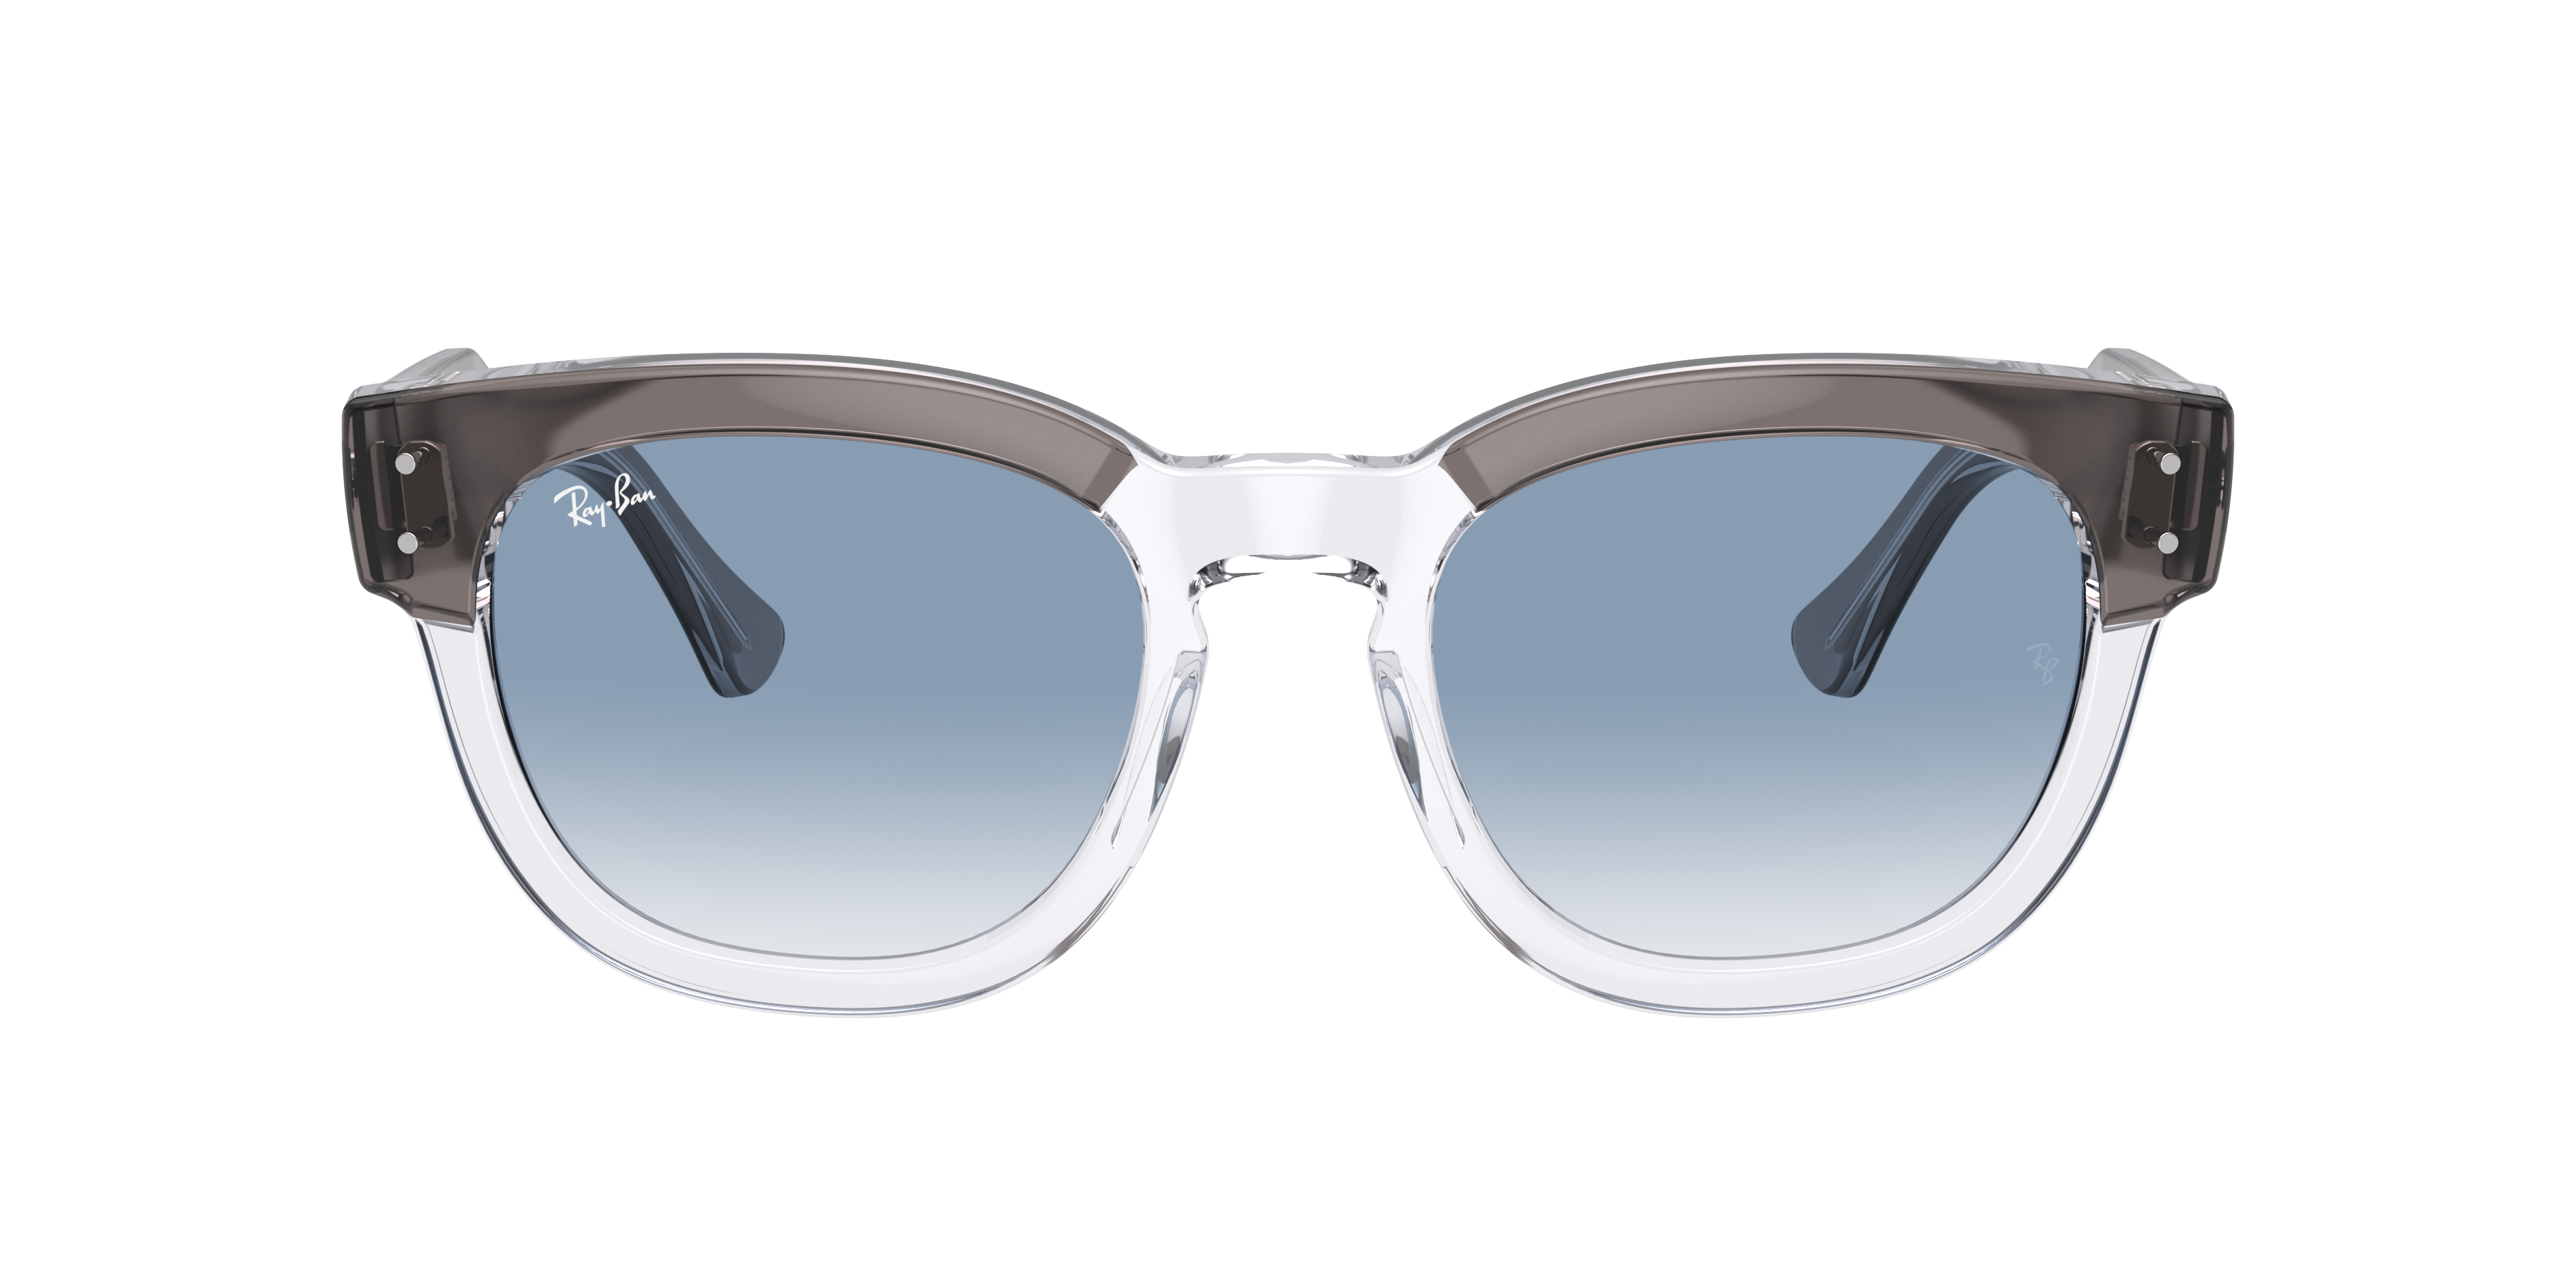 LensCrafters®: Prescription Eyewear & Contact Lenses - Ray-Ban Sunglasses -  Category